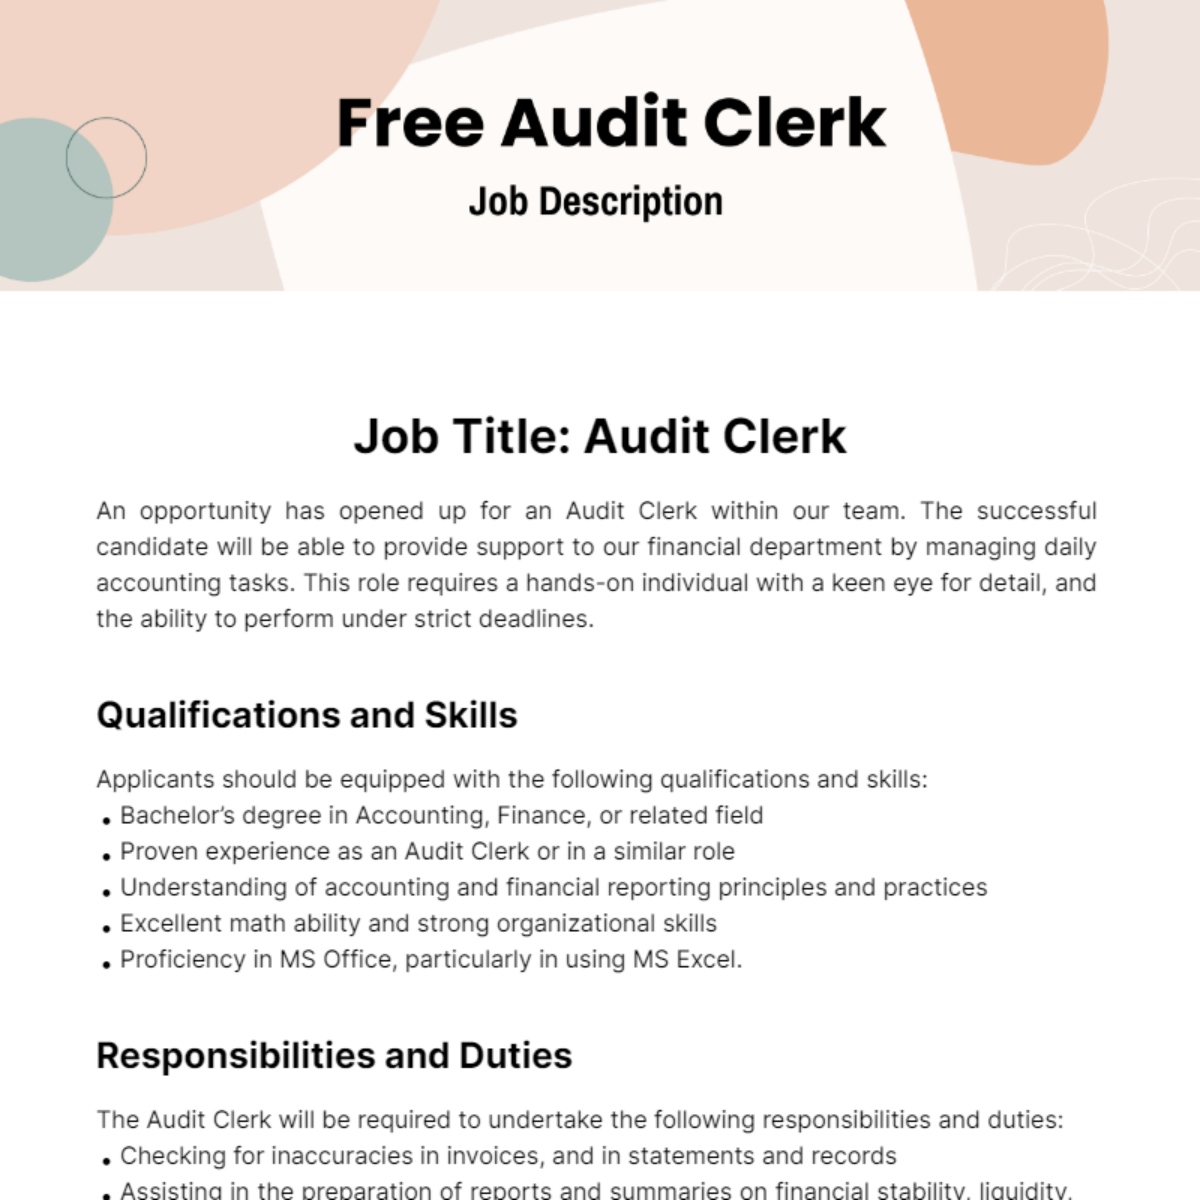 Free Audit Clerk Job Description Template